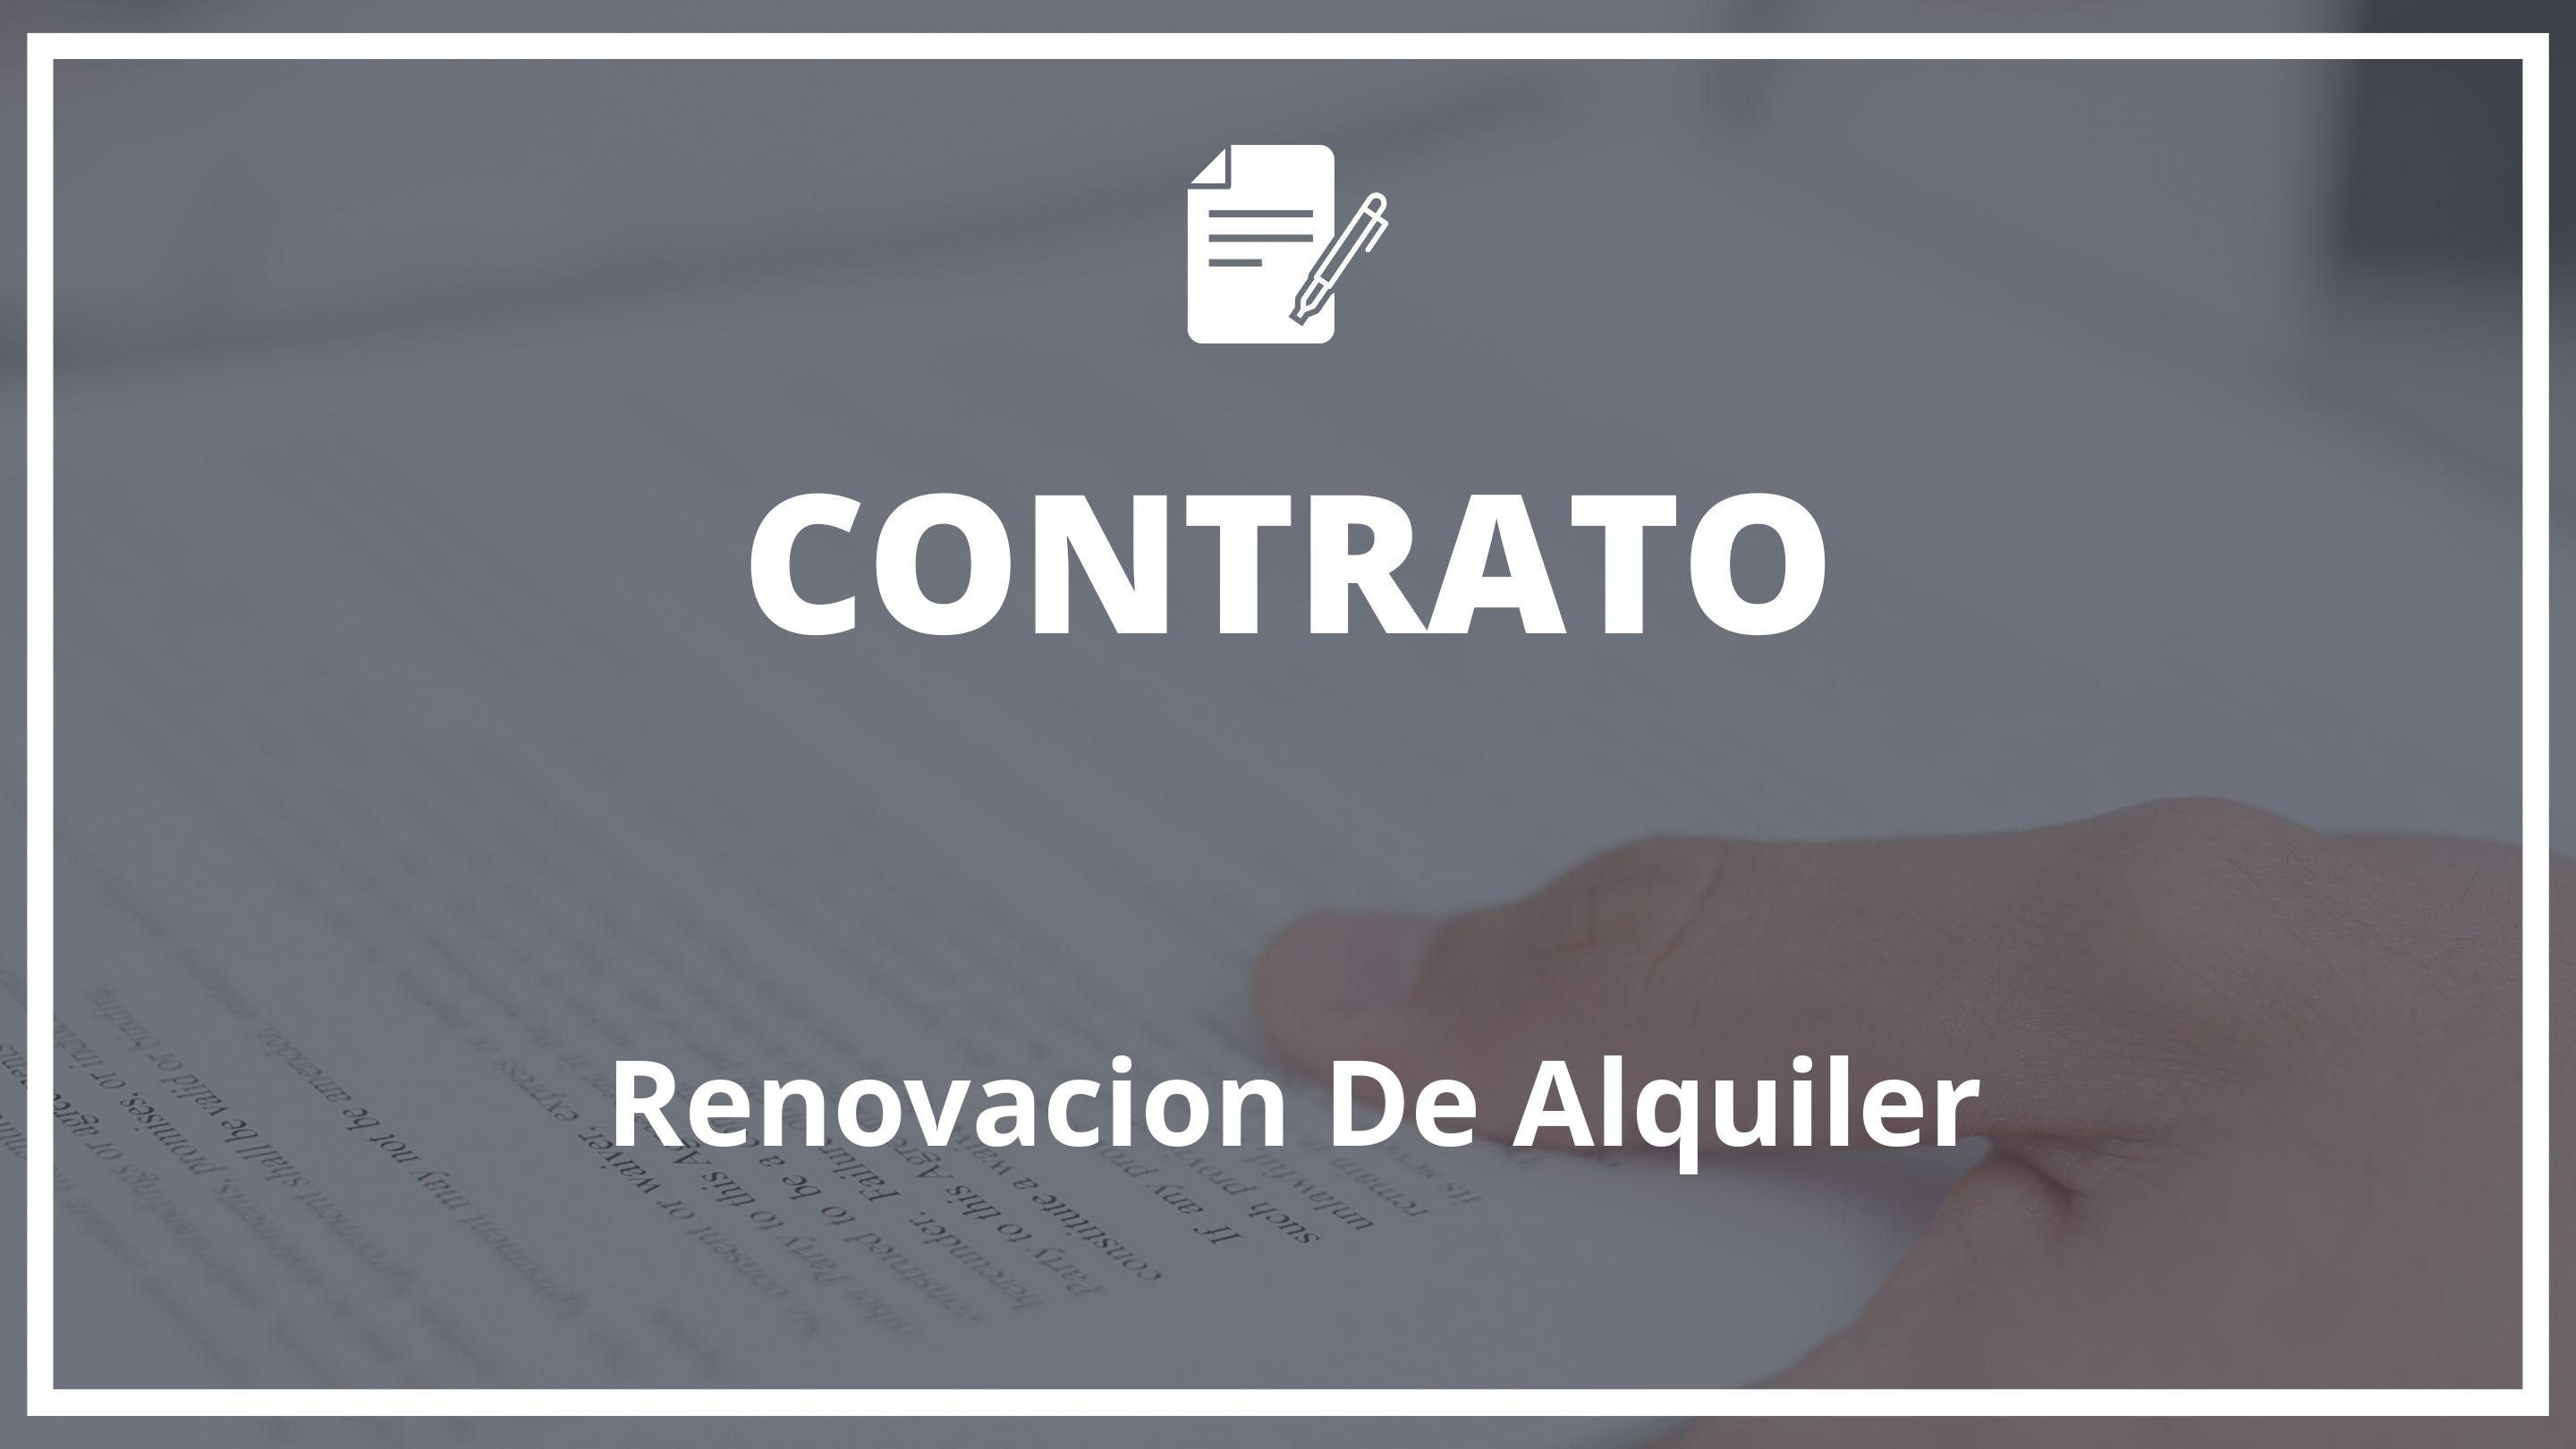 Modelo Contrato De Renovacion De Alquiler - Plantilla WORD